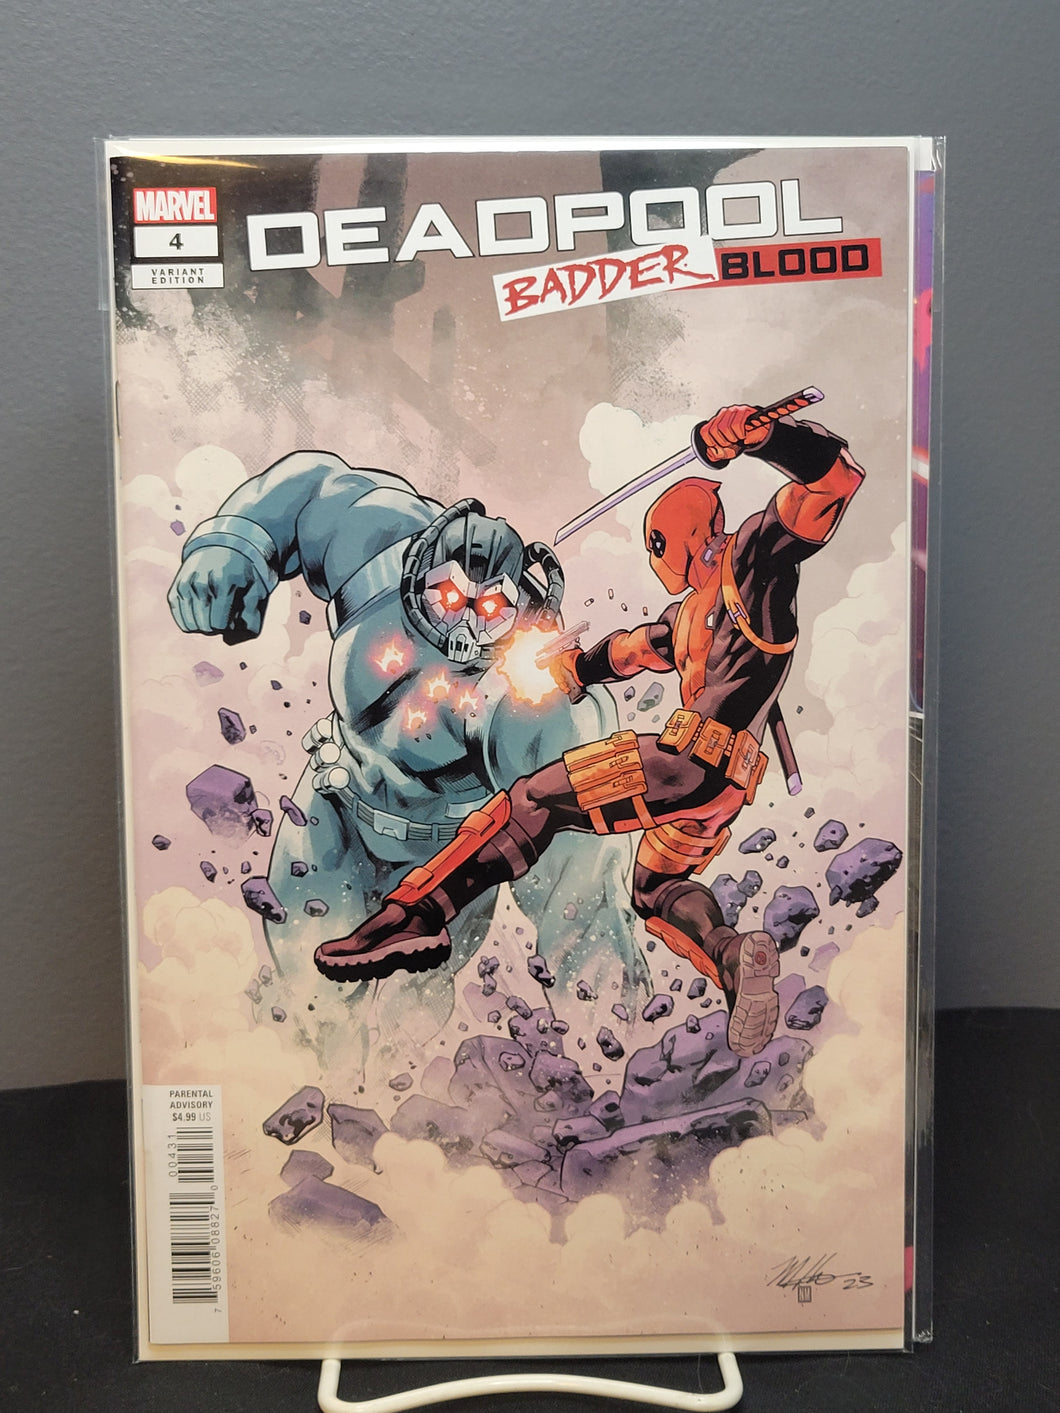 Deadpool Badder Blood #4 Variant